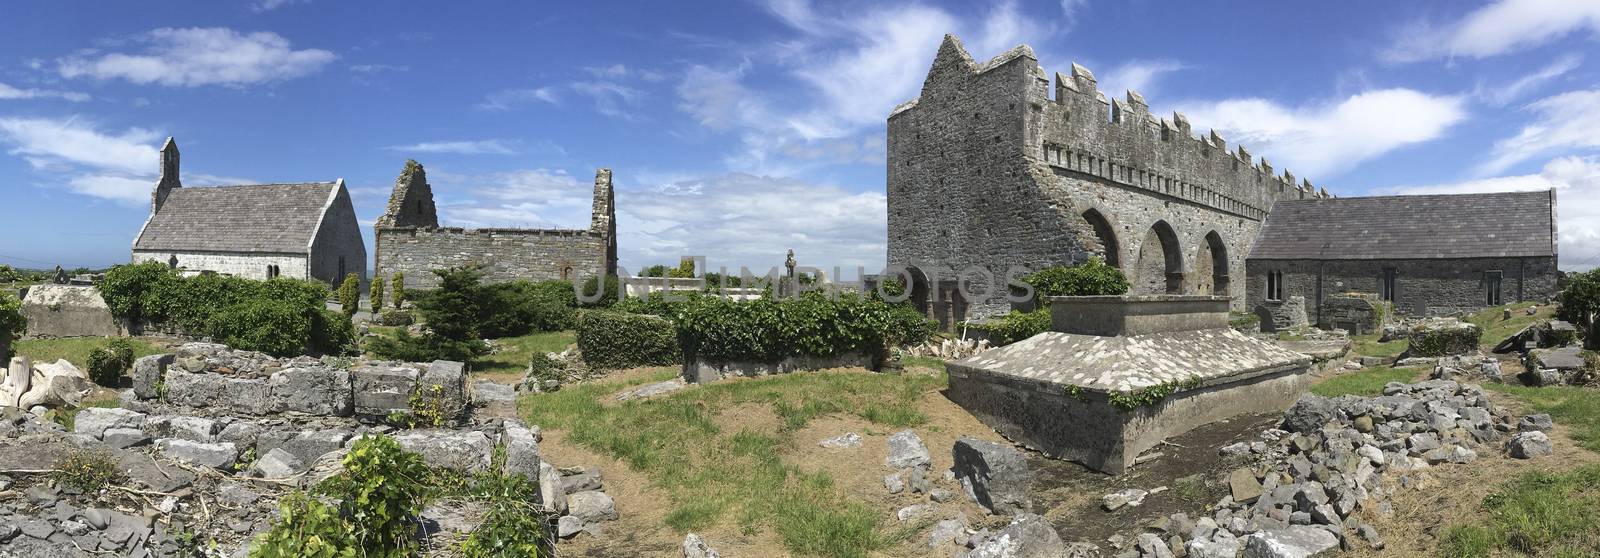 Ardfert Cathedral - County Kerry - Ireland by SteveAllenPhoto